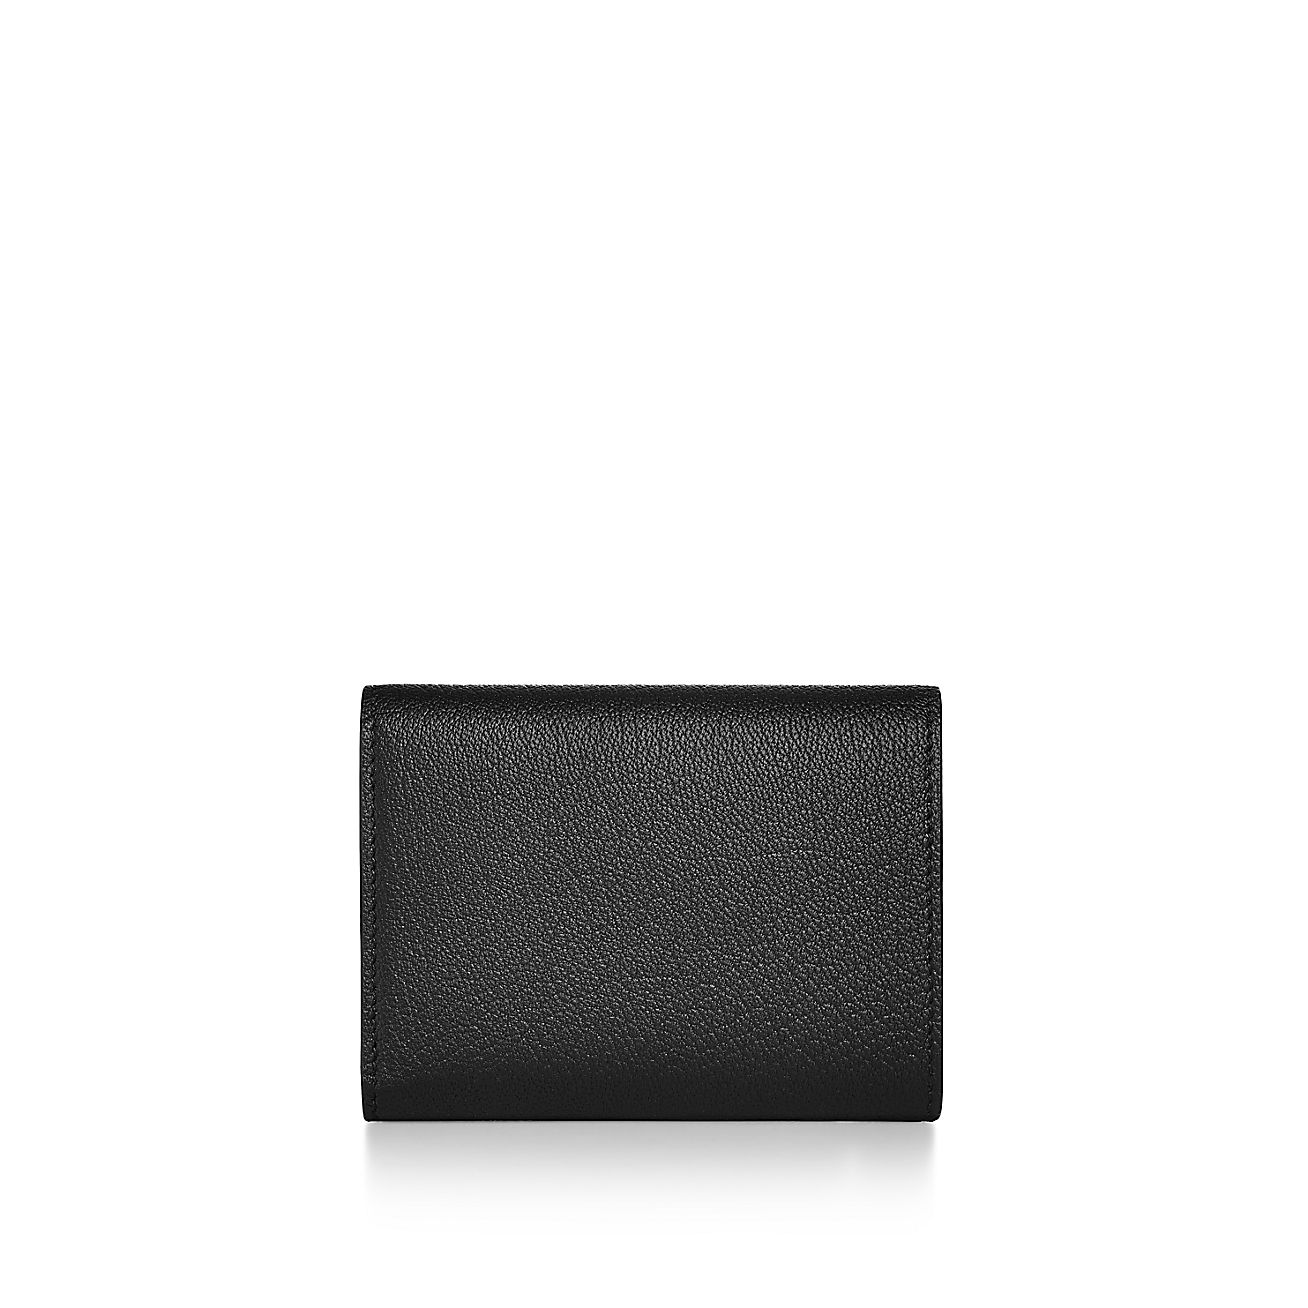 Tiffany T Wallet in Black Leather